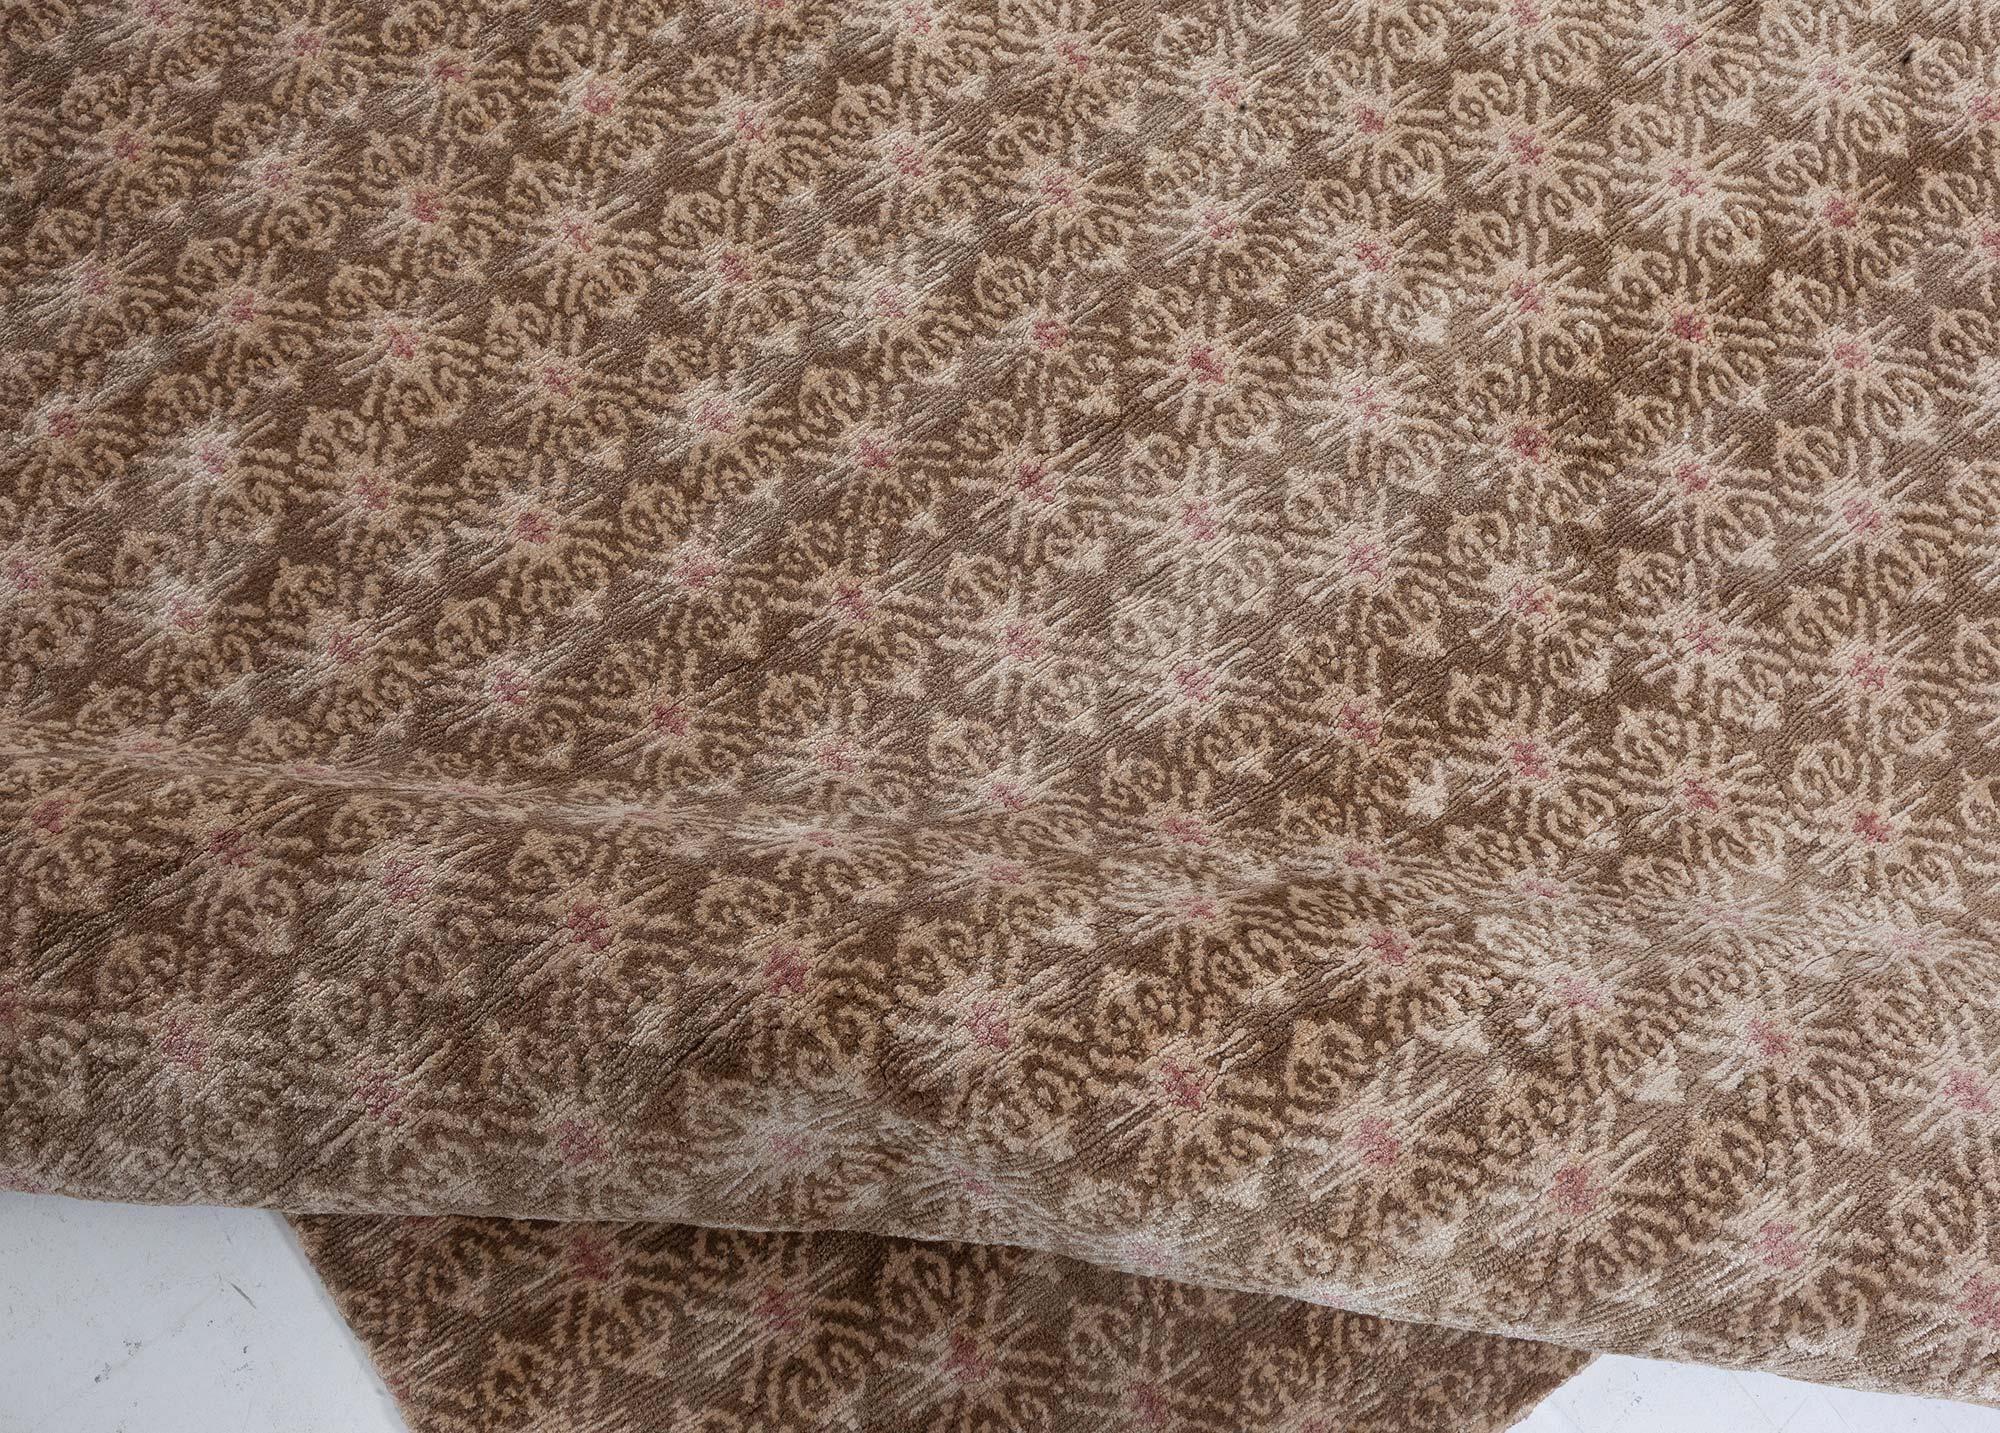 Traditional Inspired rug by Doris Leslie Blau
Size: 11'10